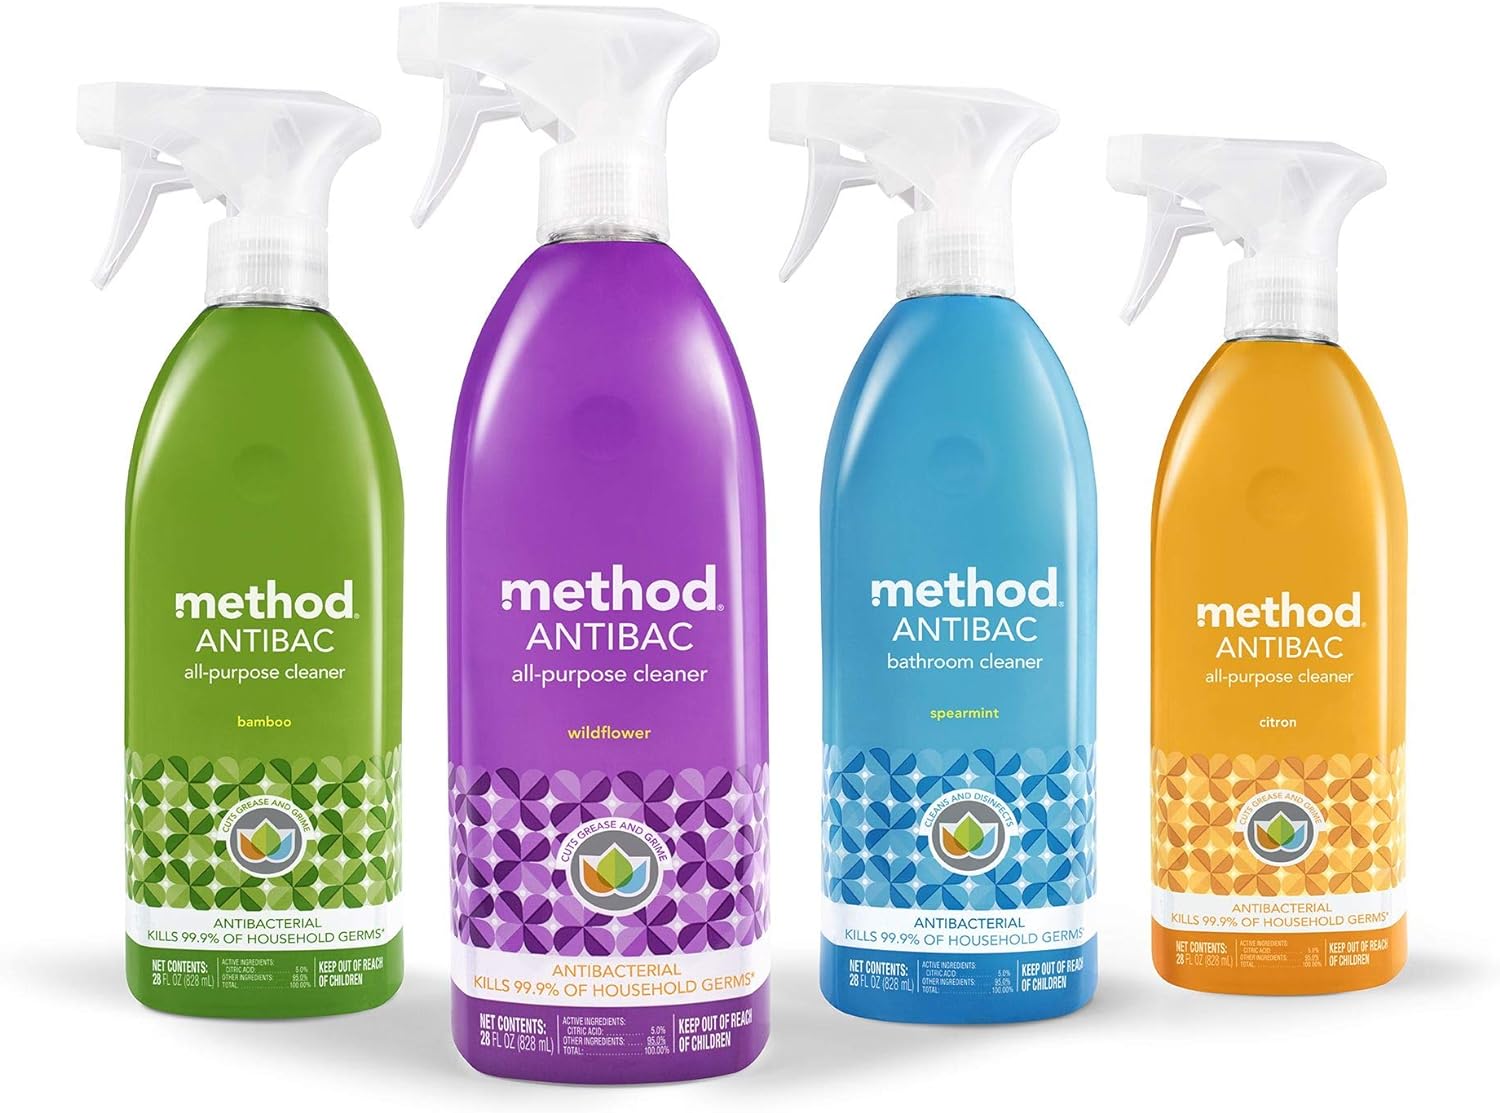 Method Antibacterial All-Purpose Cleaner Spray, Citron, Kills 99.9% of Household Germs, 28 Fl Oz (Pack of 8) : Health & Household